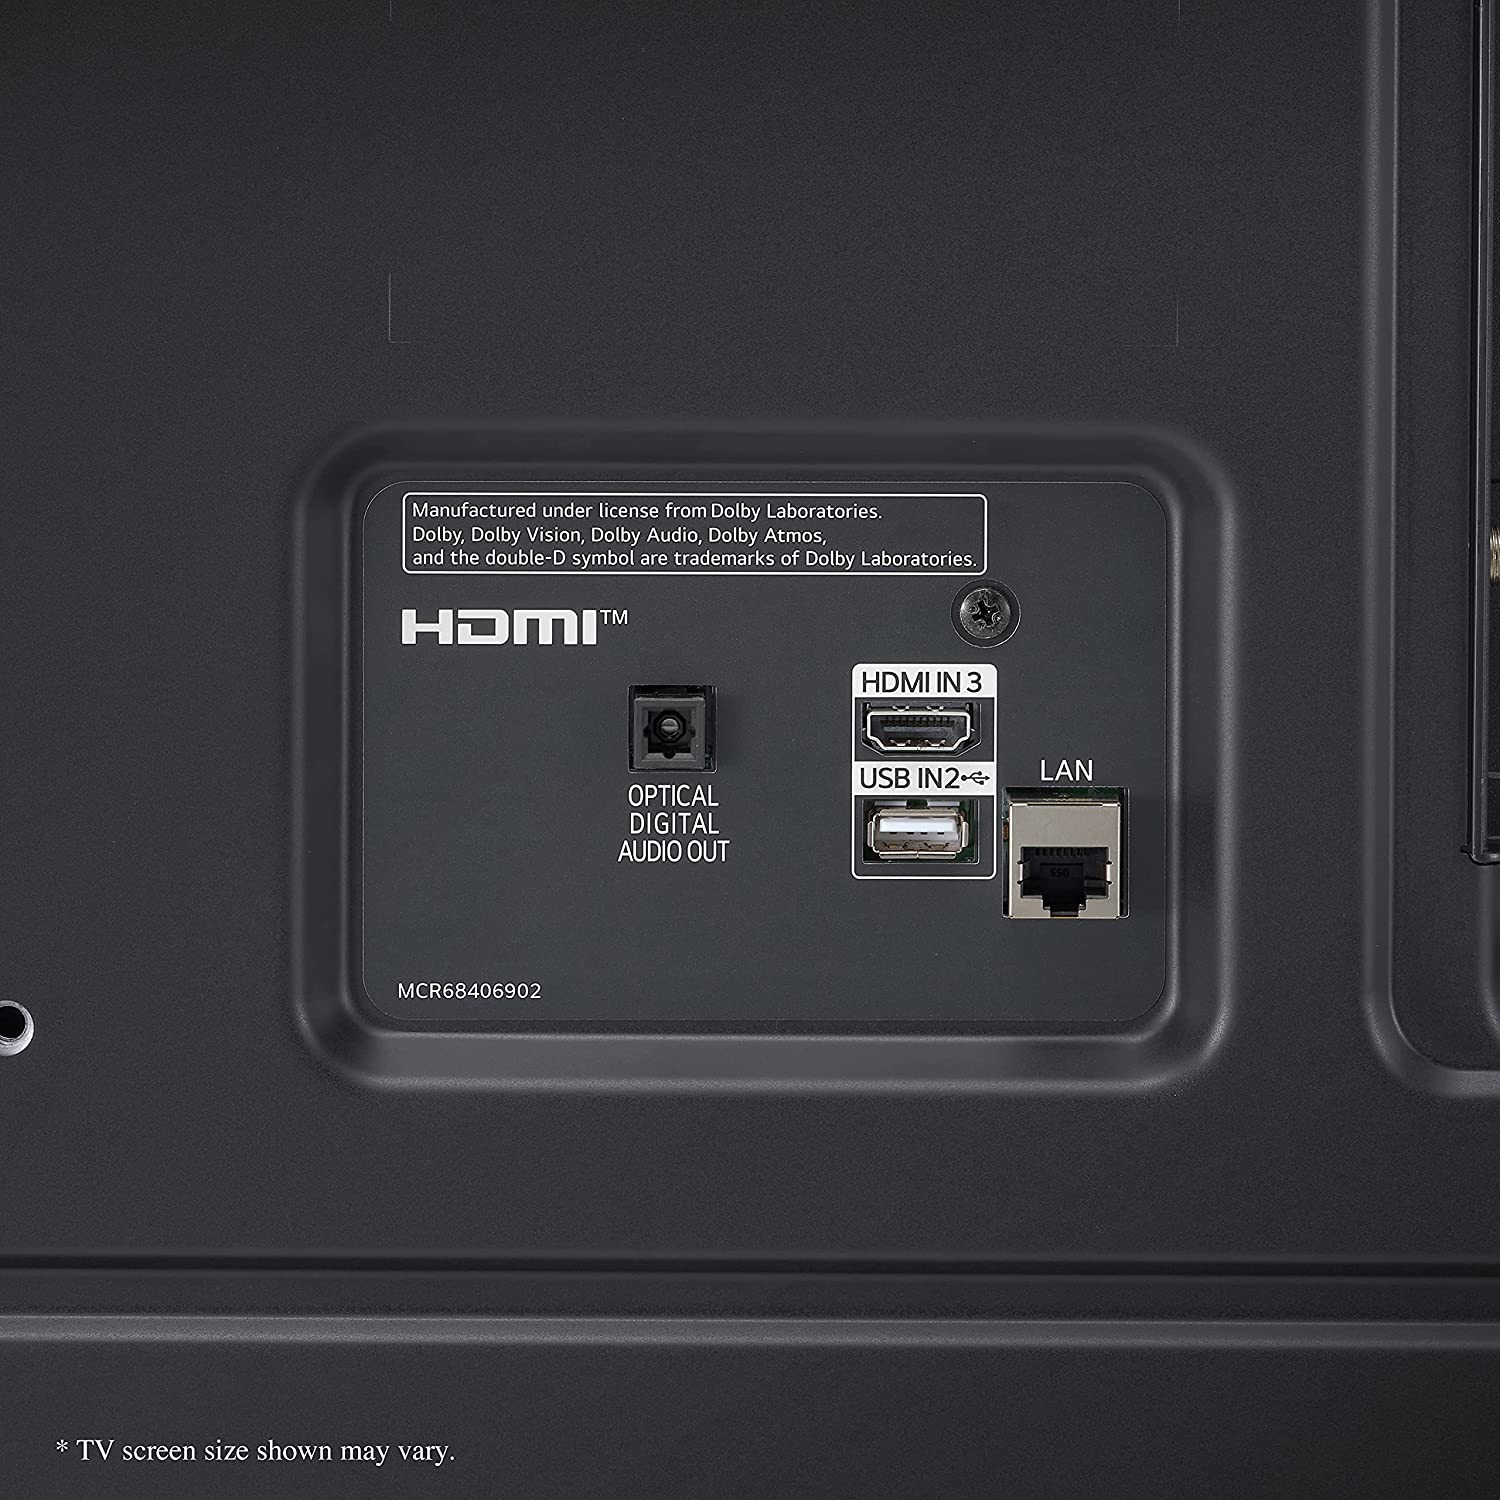 LG 43NANO75 43" 4K HDR Smart NanoCell LED TV